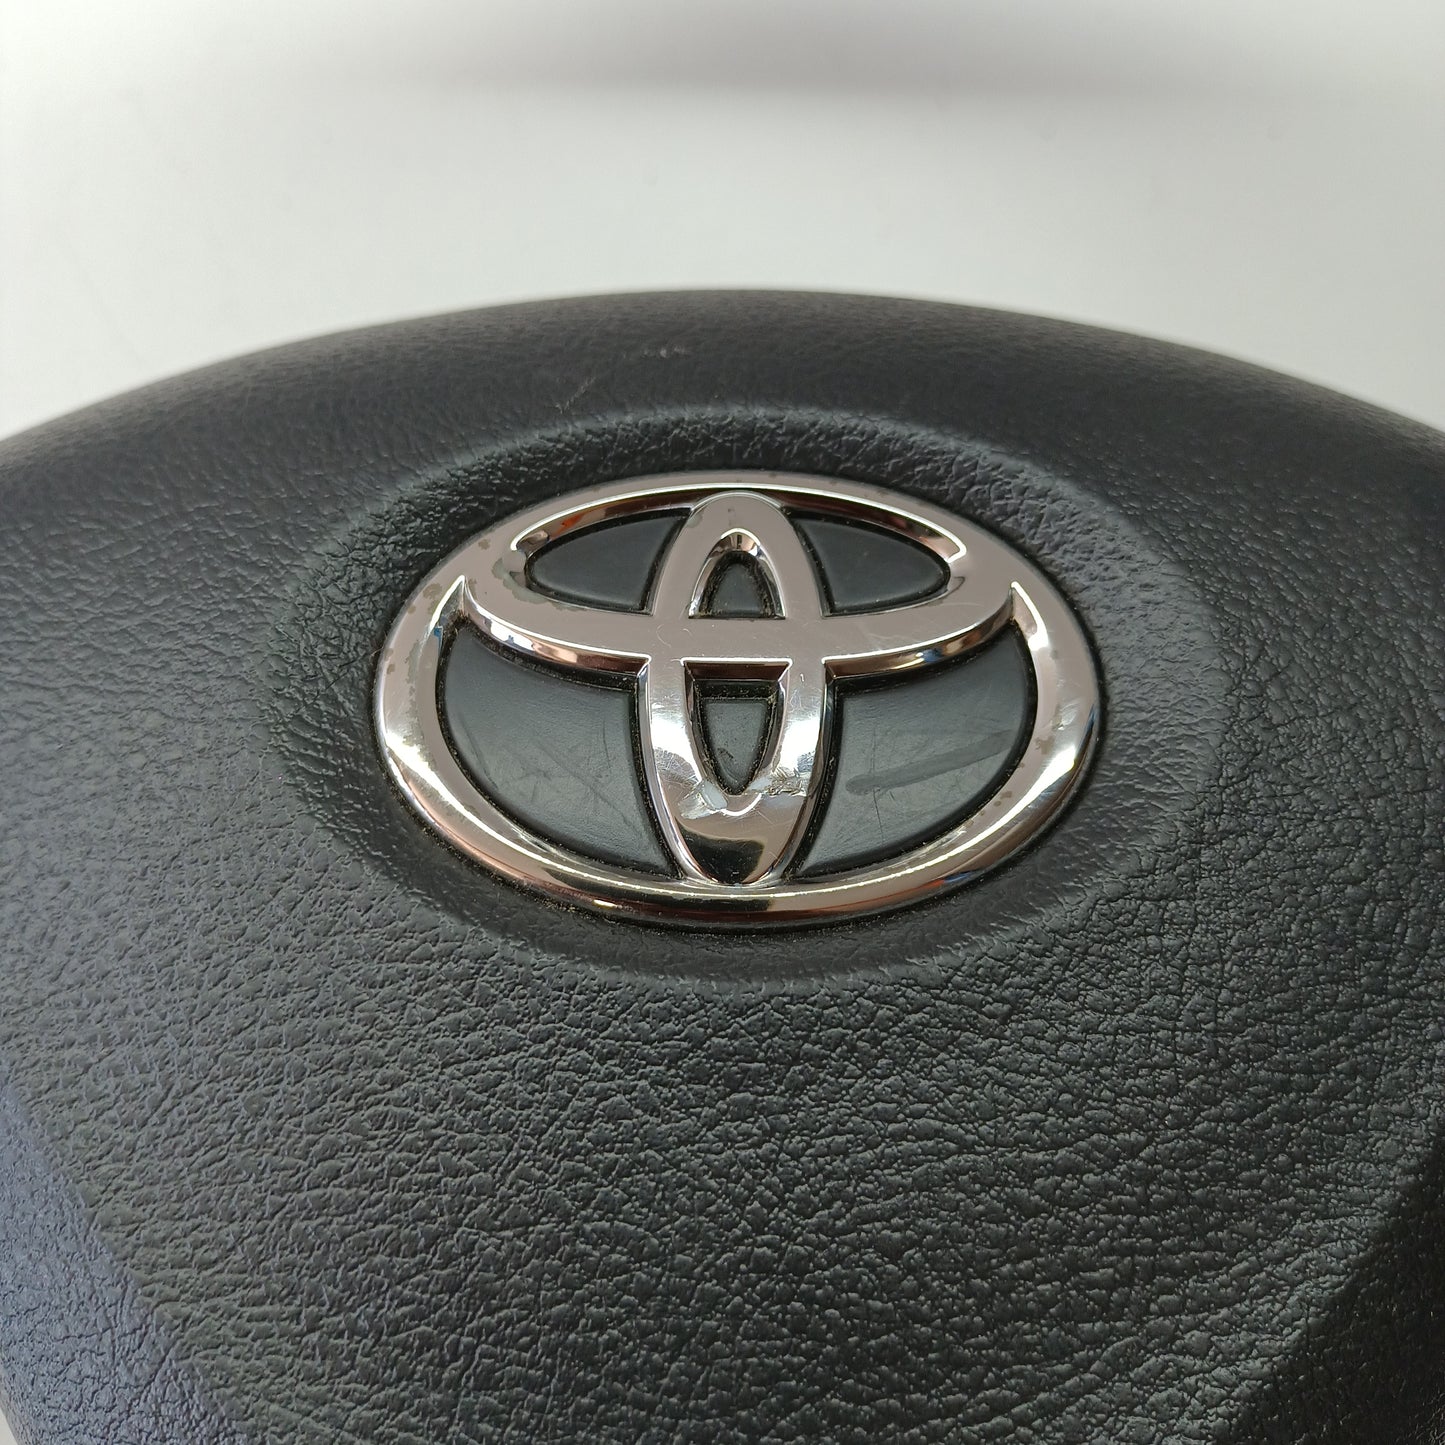 Toyota Corolla Sedan Steering Wheel Vinyl Type ZRE152R 2007 2008 2009